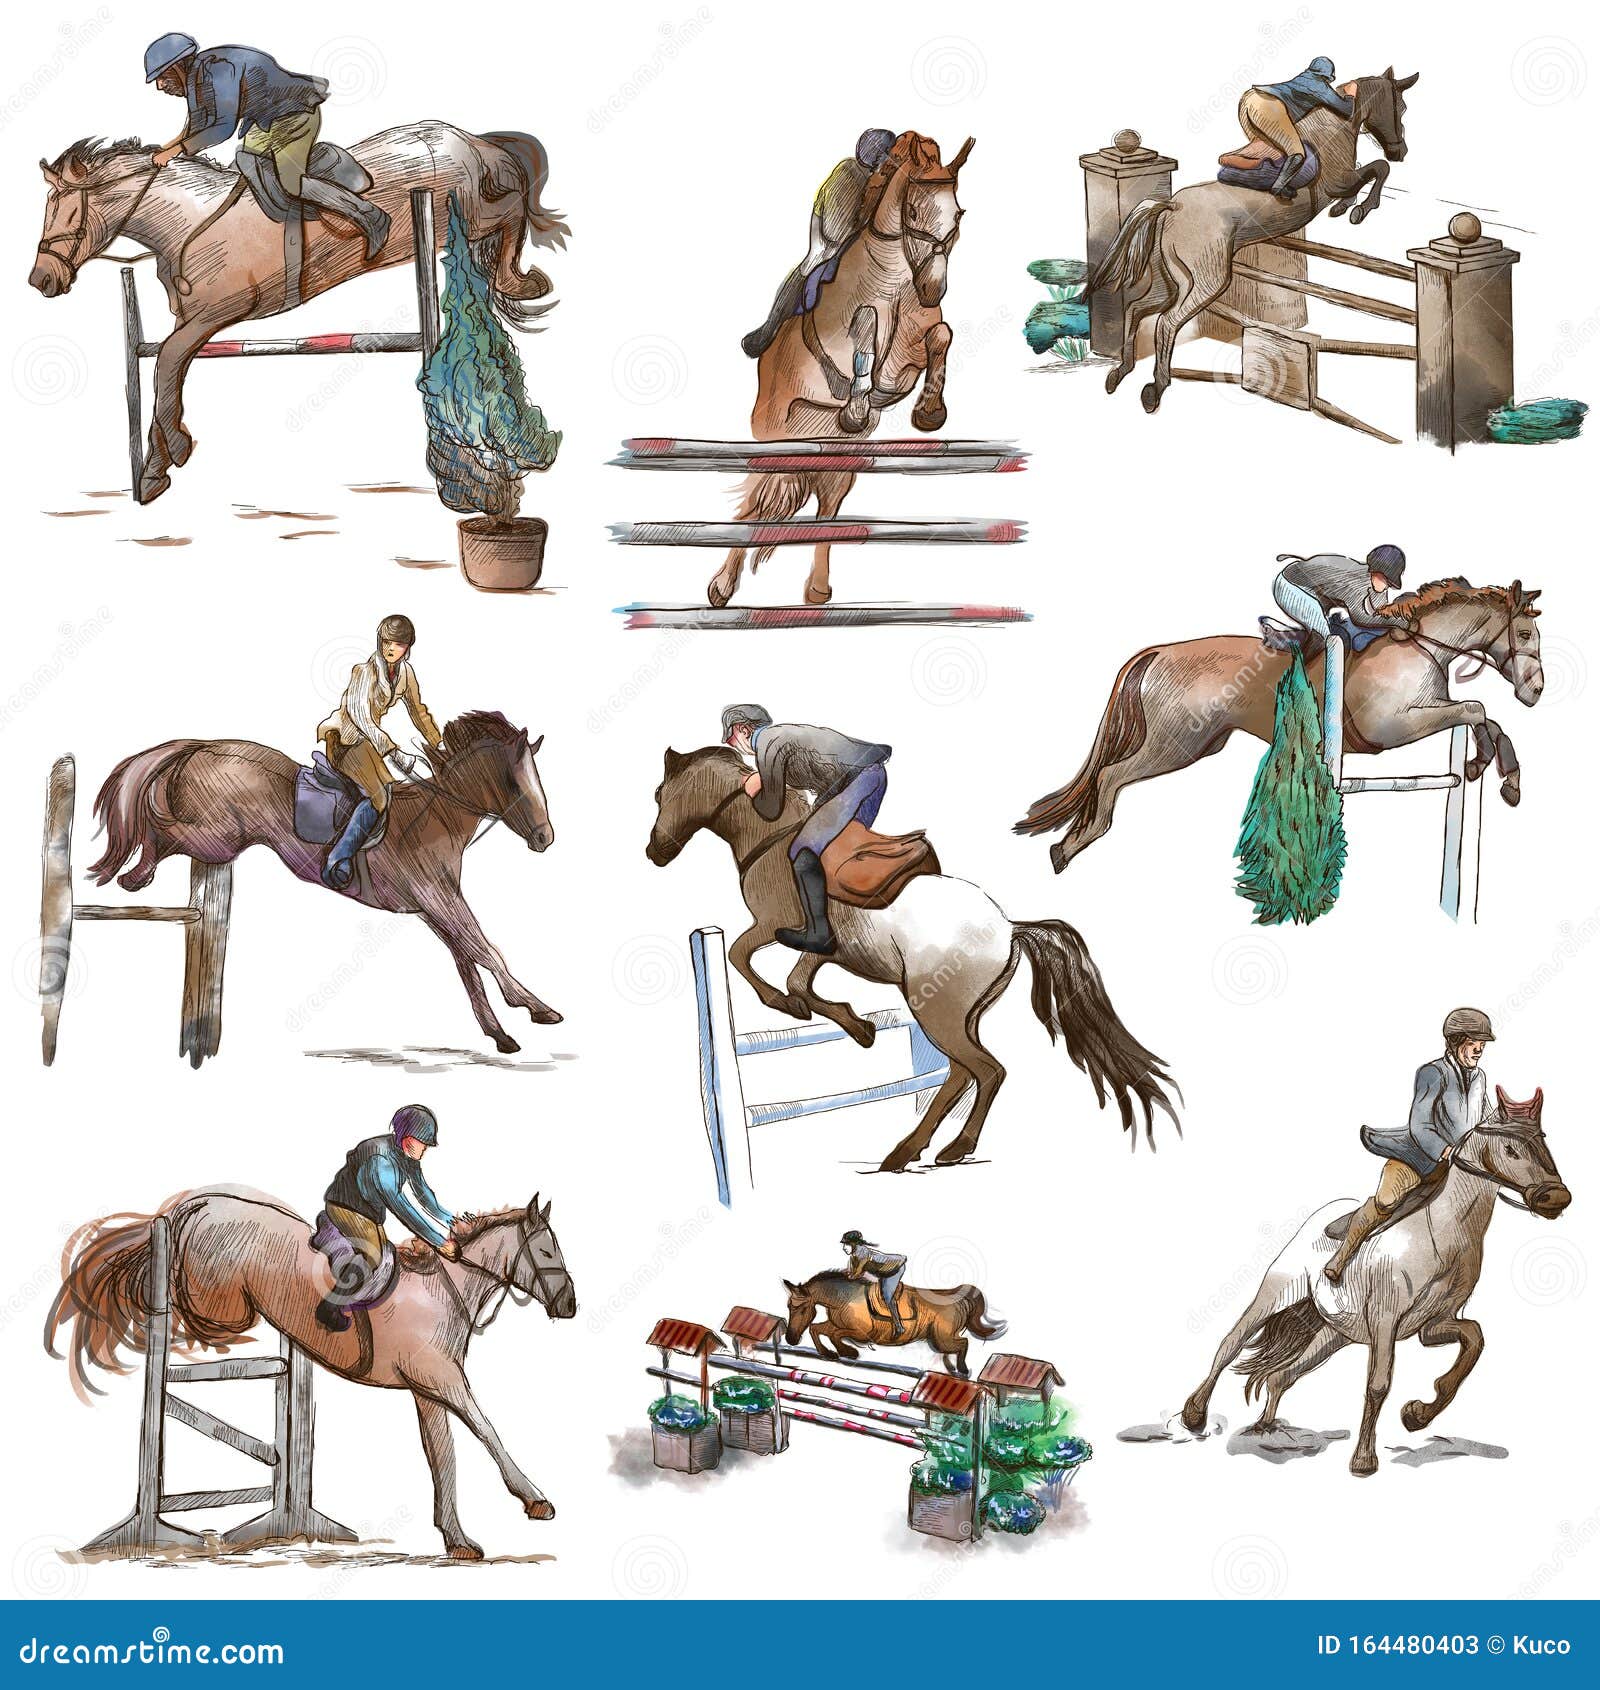 Horse Jump - Study Sketch - UPDATED! by Nachvoir on DeviantArt